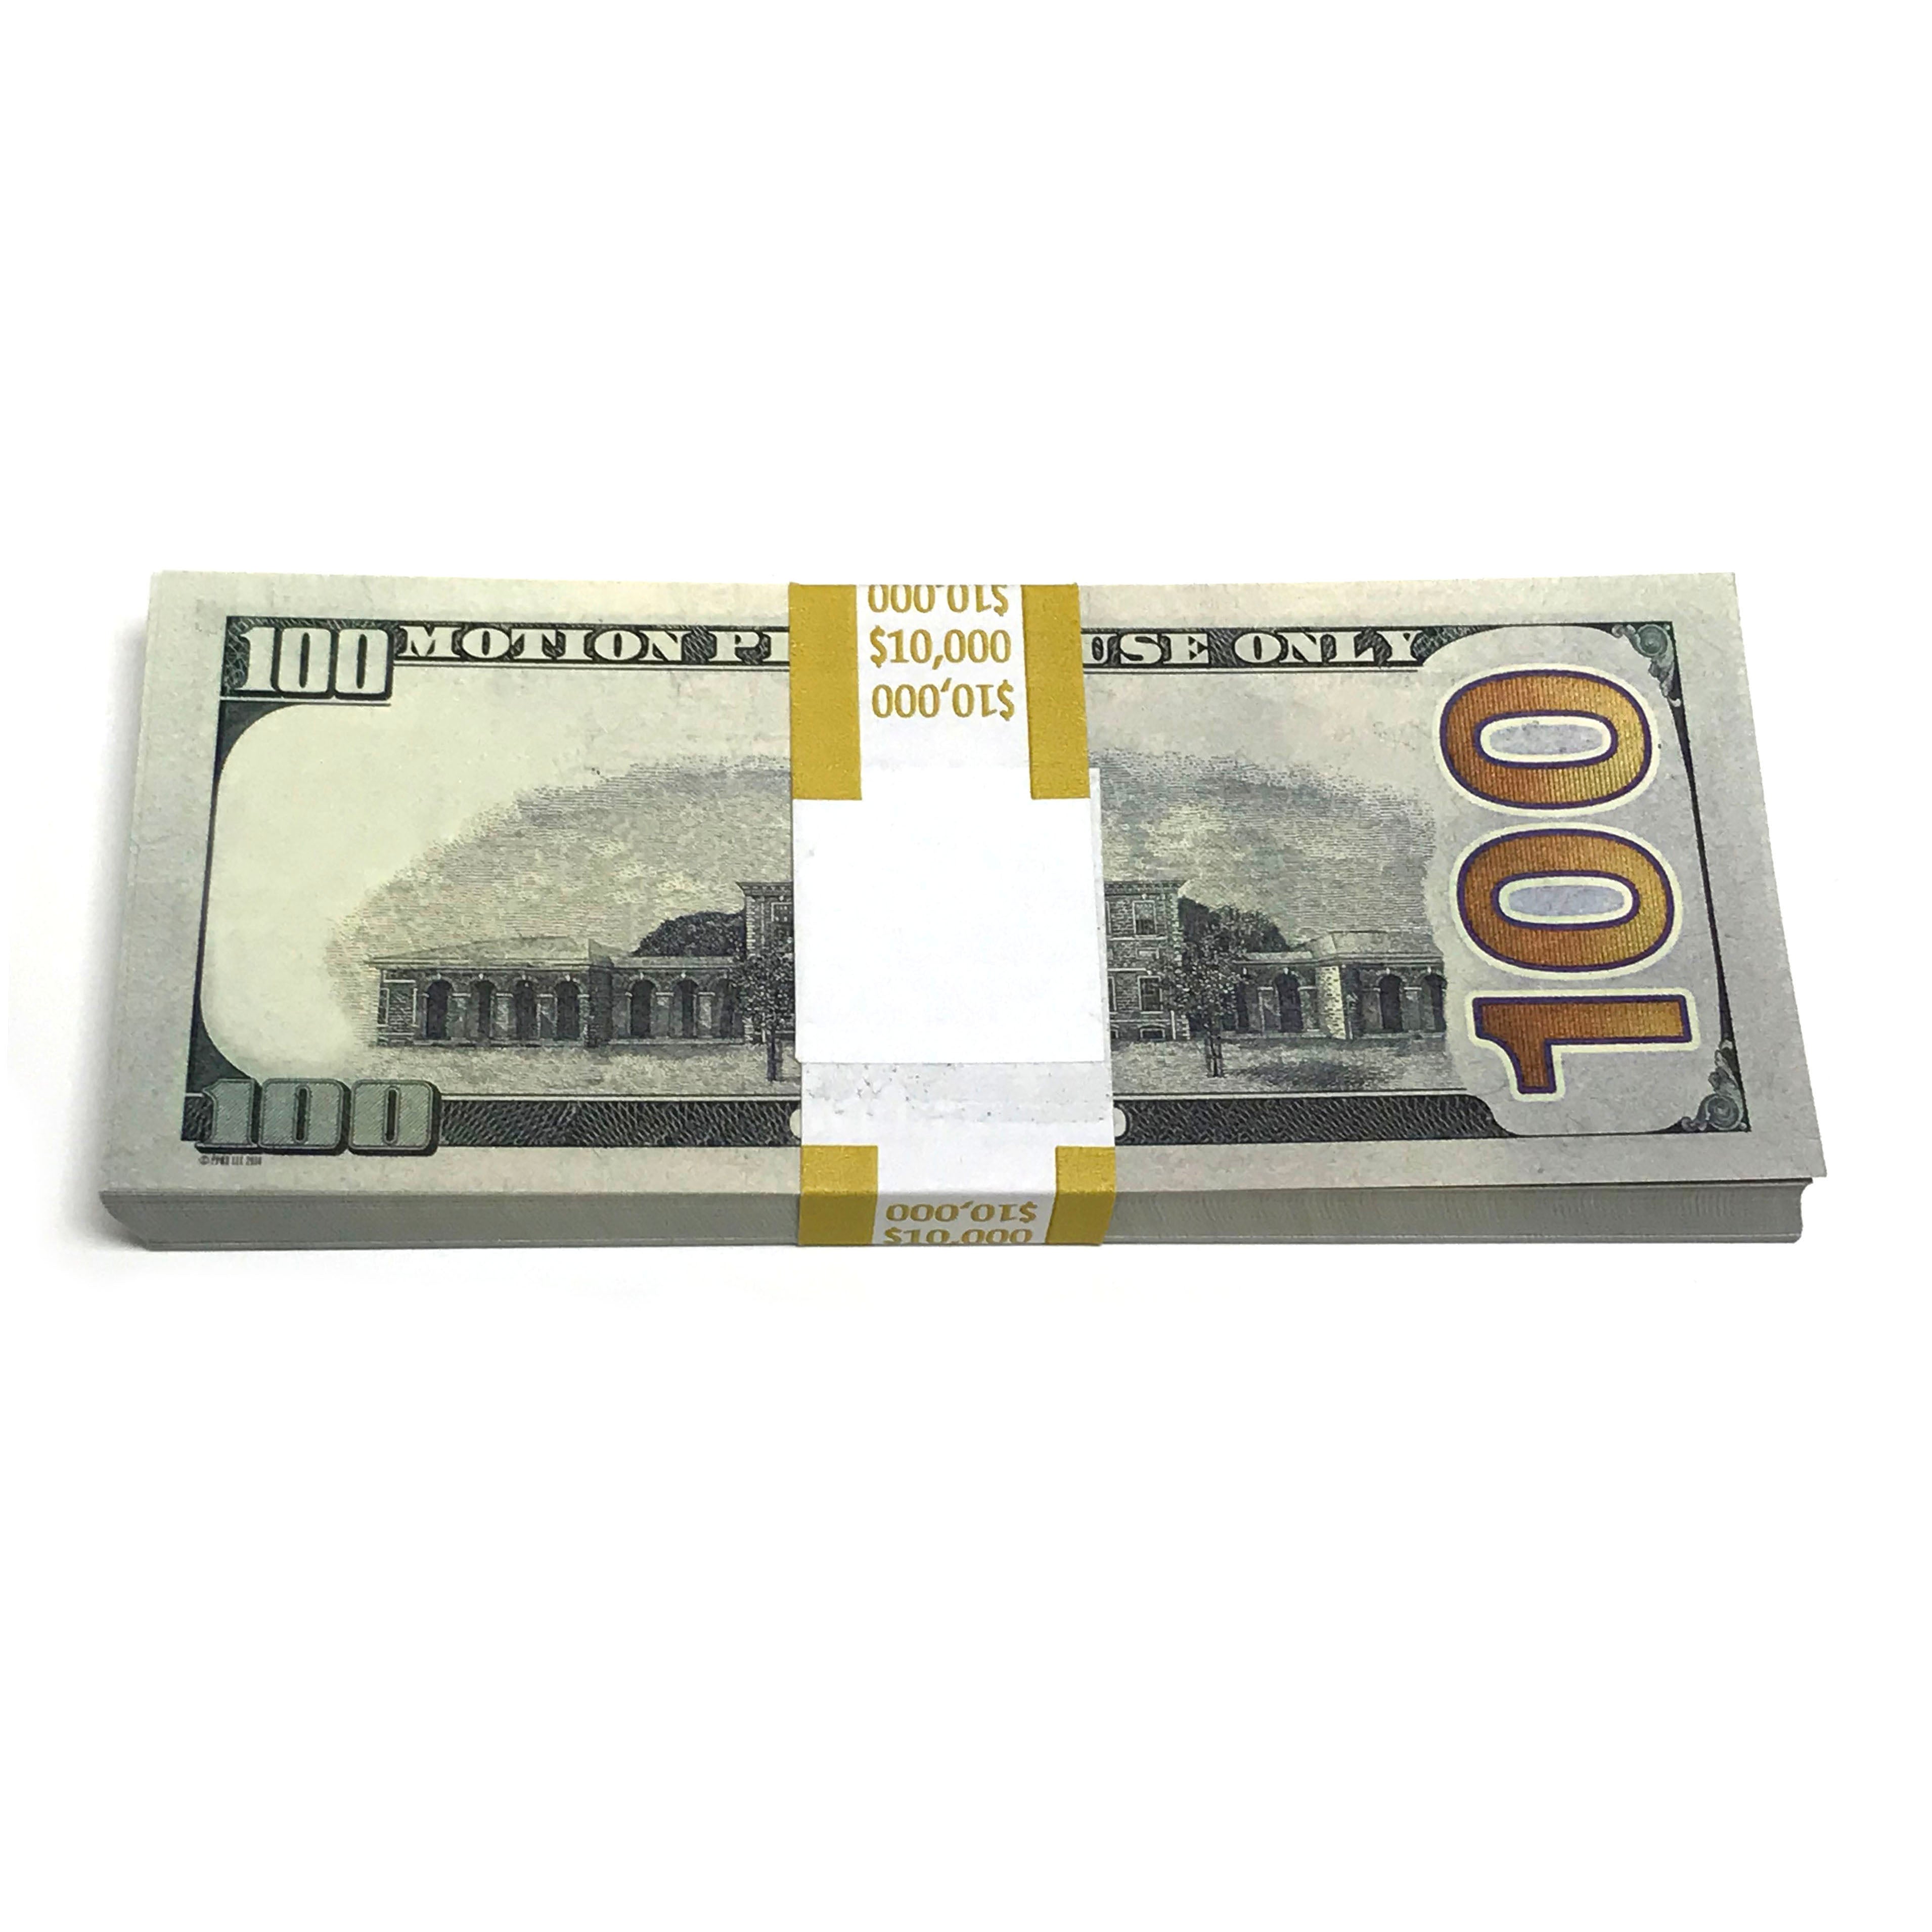 1 Stack of $100 Prop Bills (100 bills/$10,000 value) - Realistic Fake Money  : MJM Magic